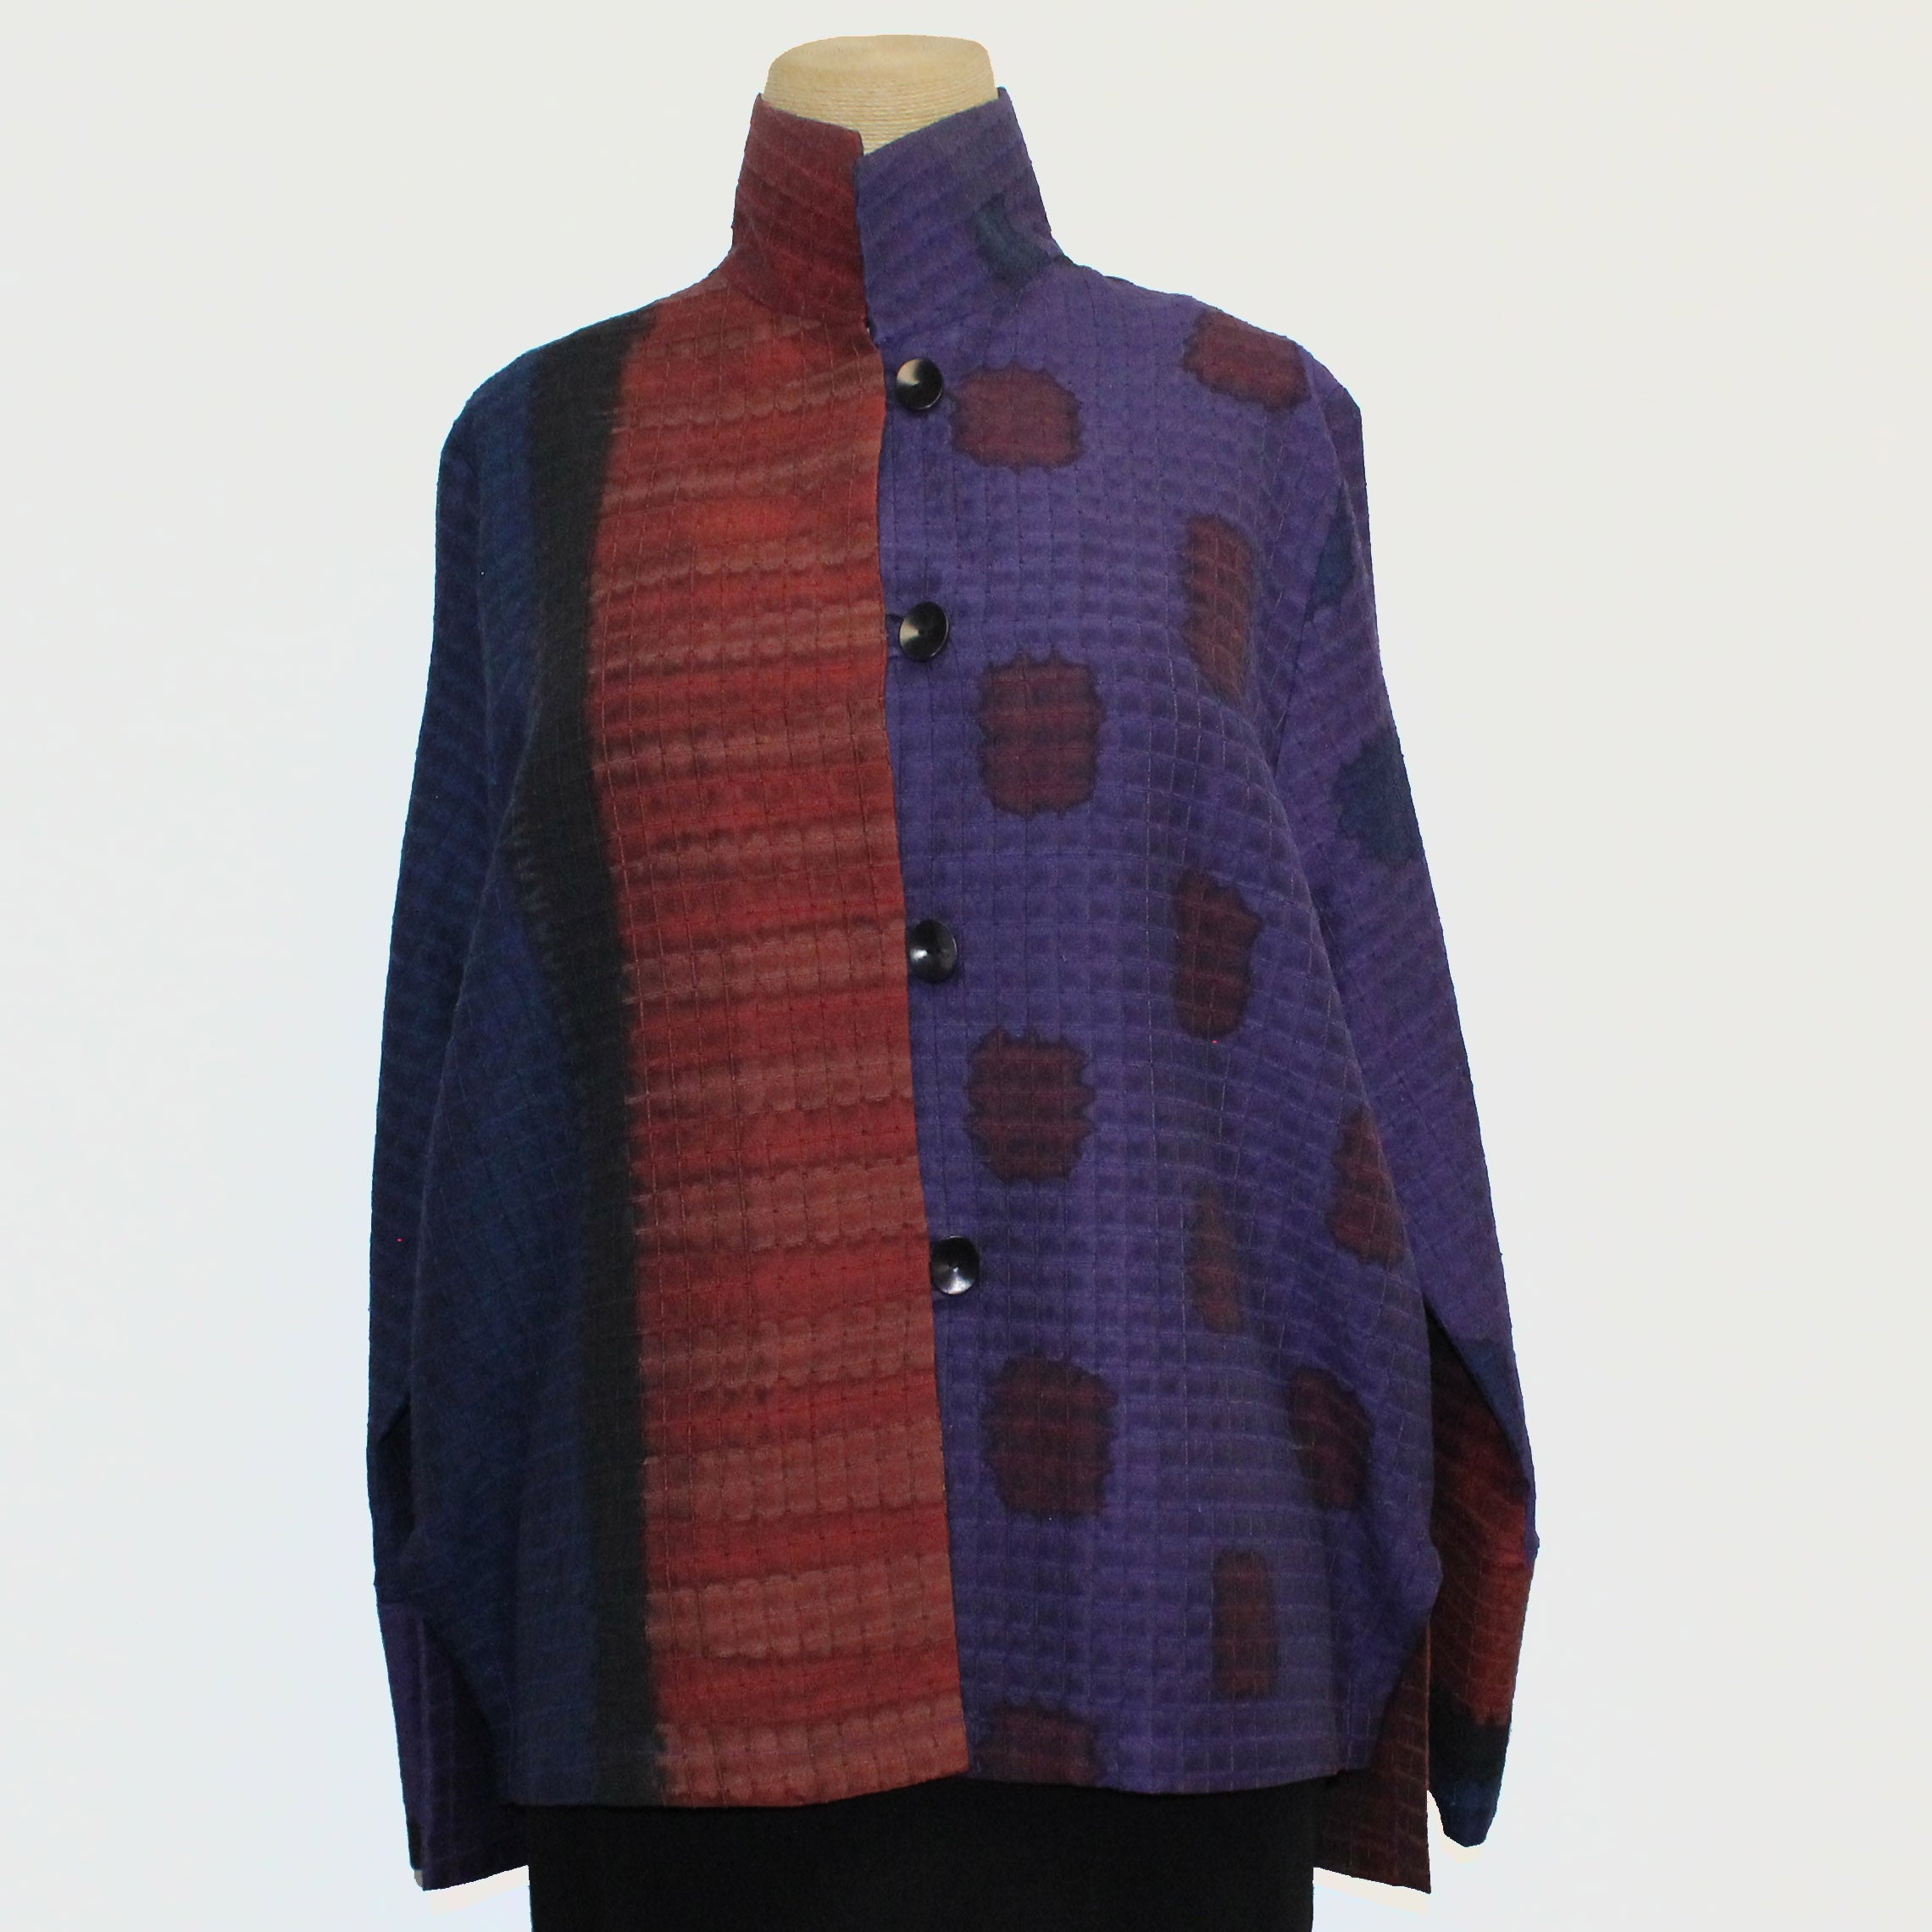 Kay Chapman Jacket, Loop Button, Patchwork, Rust/Purple/Blue, M